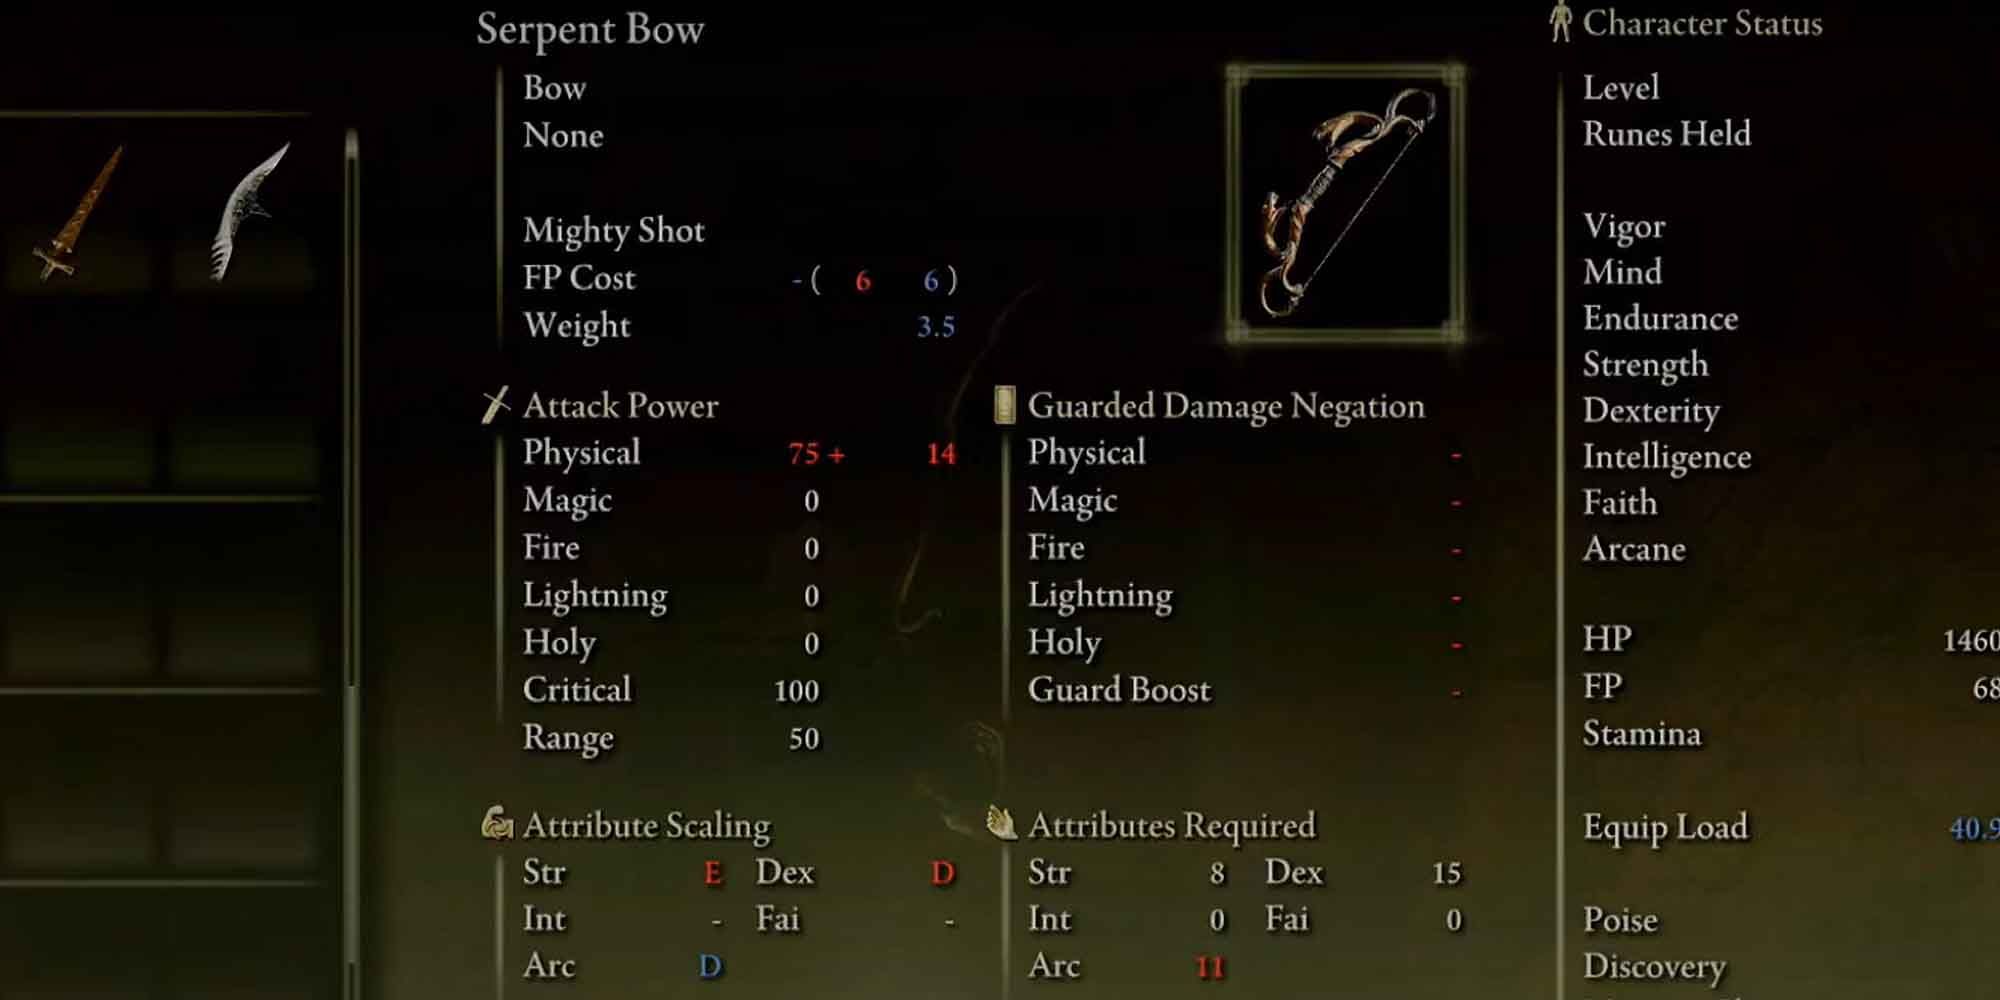 The Serpent Bow in Elden Ring